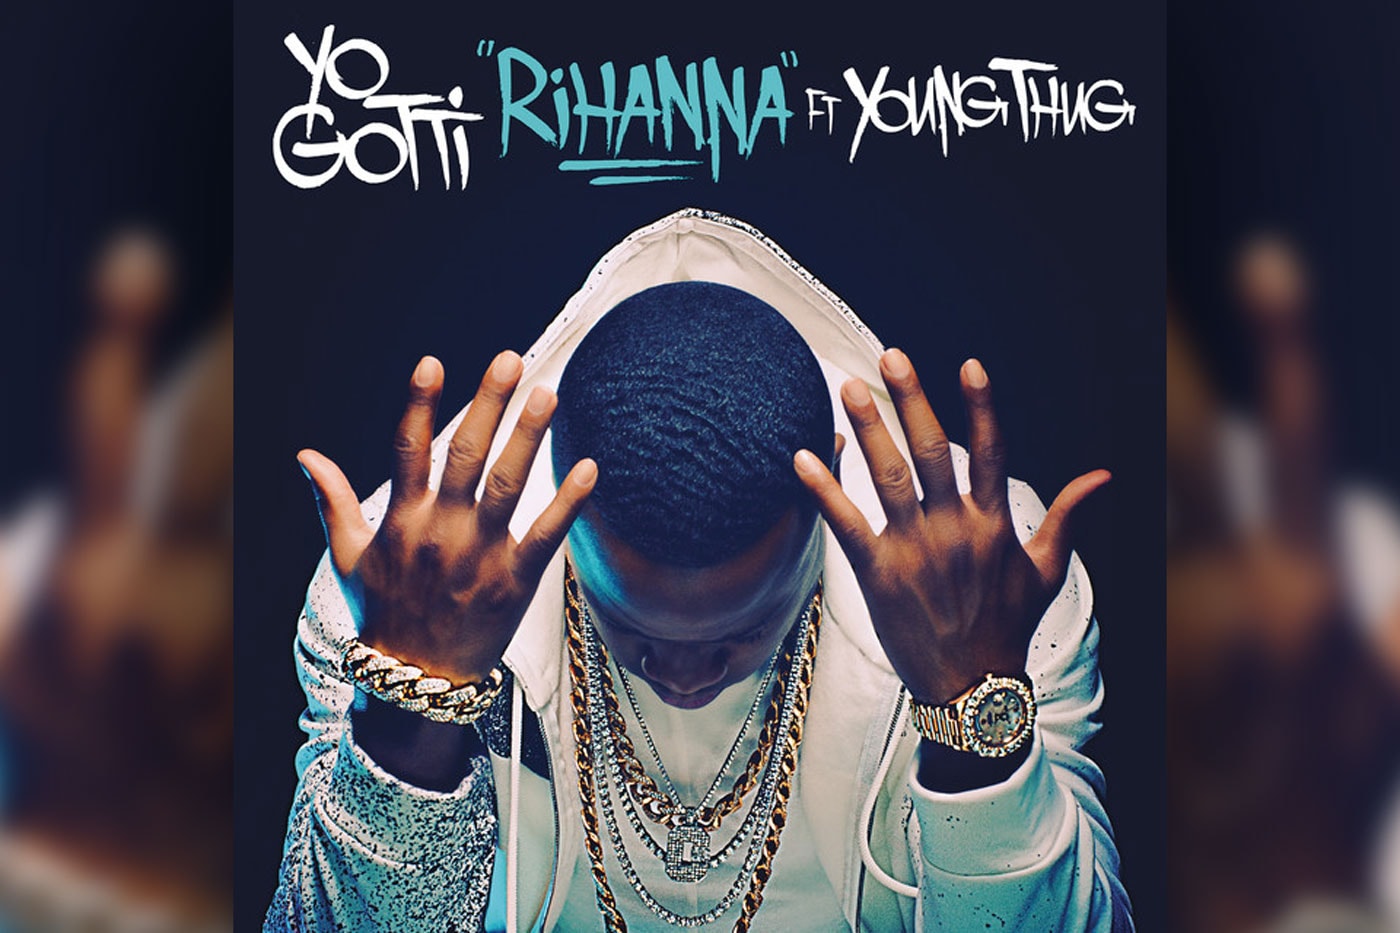 Yo Gotti featuring Young Thug - Rihanna